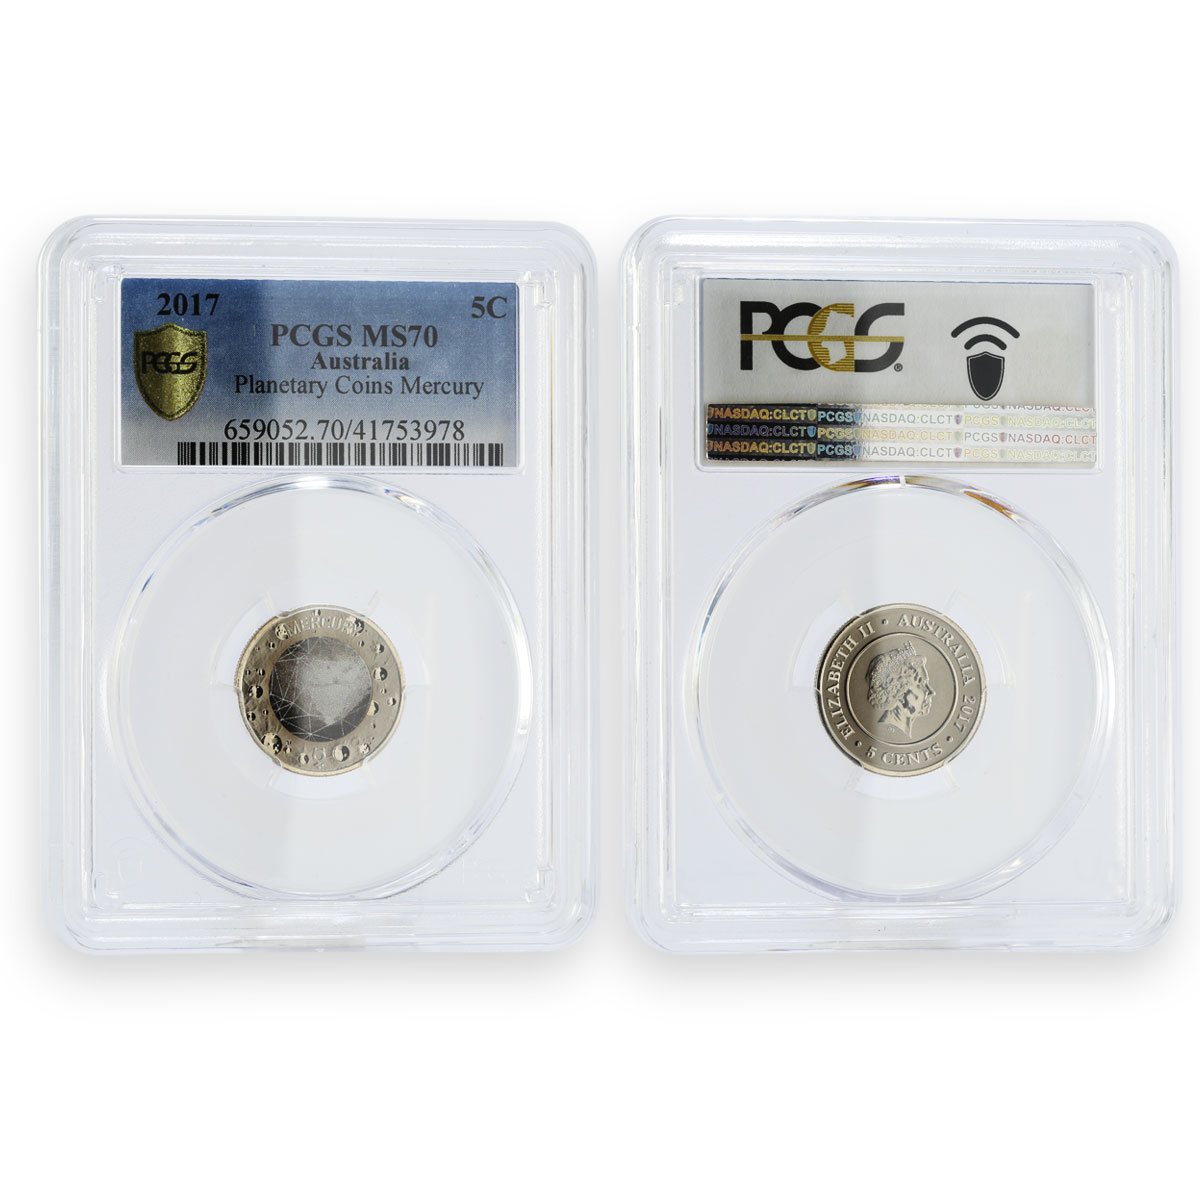 Australia set of 10 coins Planetary Coins MS69 PCGS aluminuim coins 2017